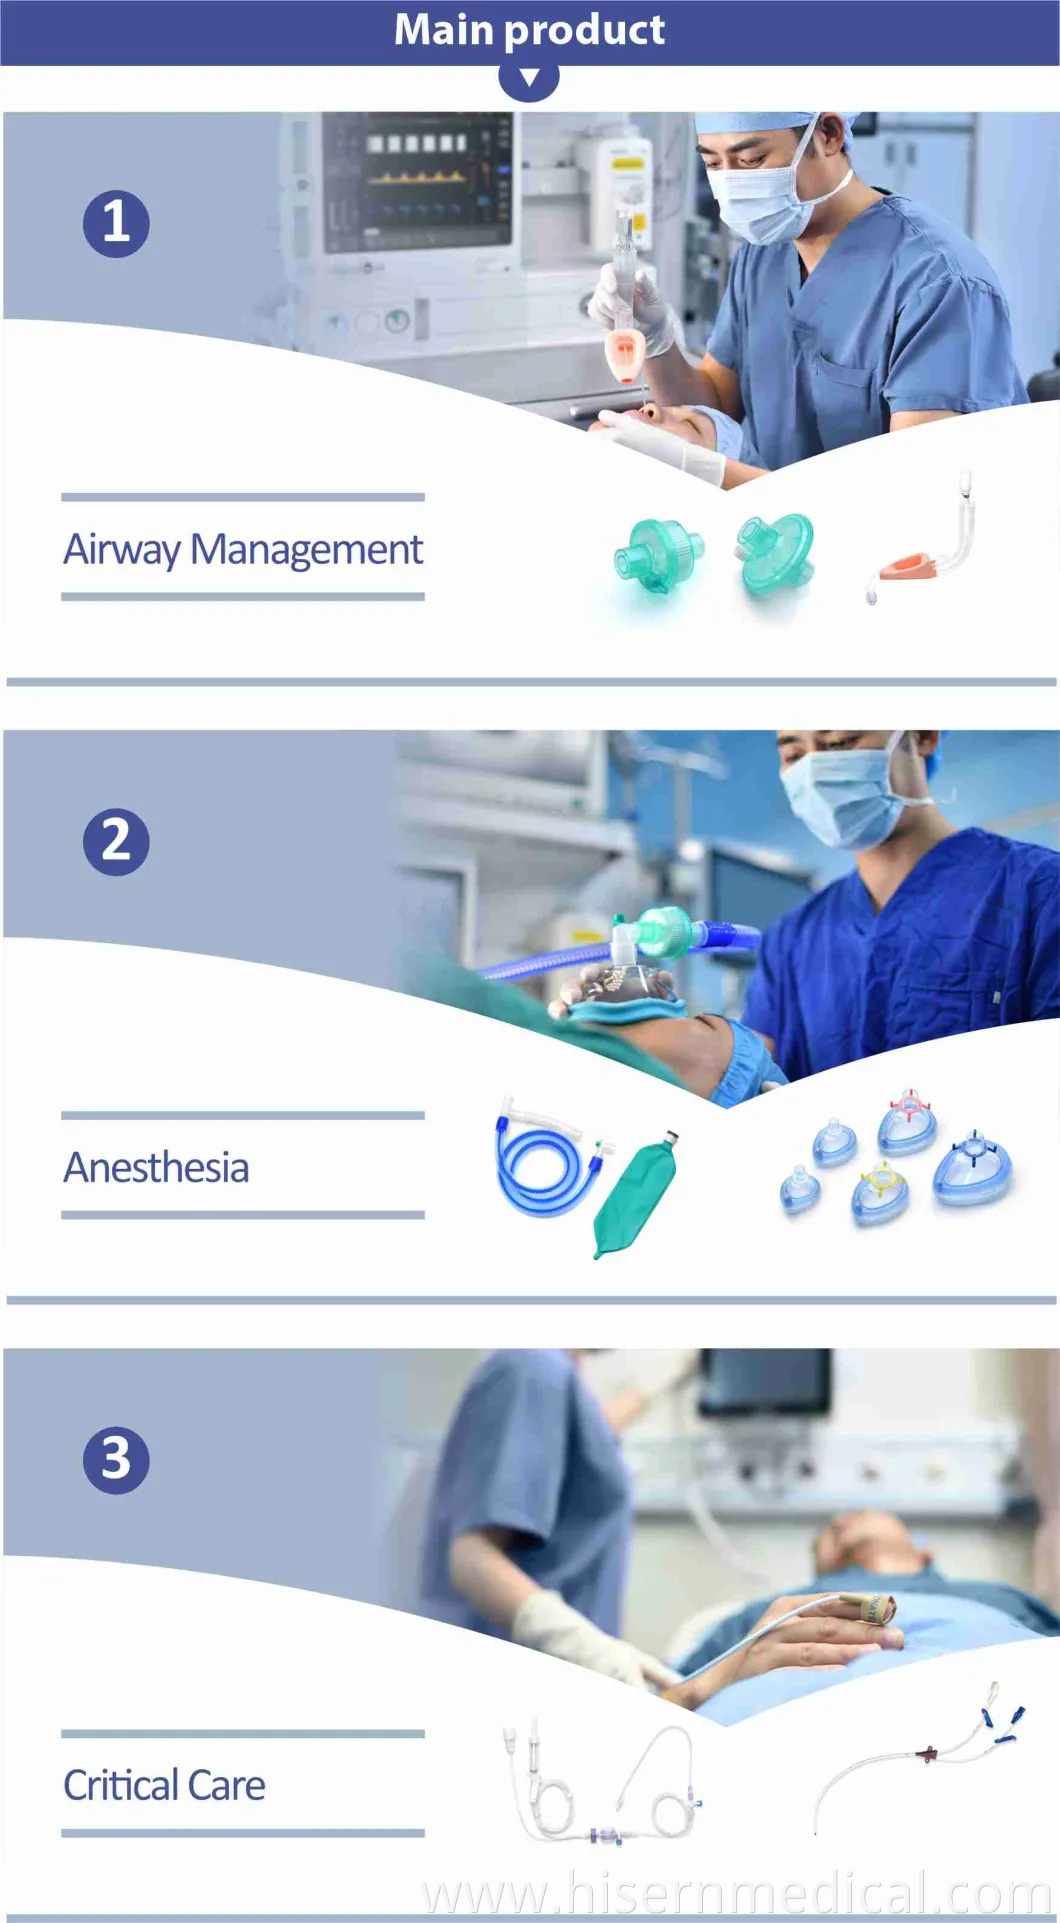 Medical Equipment Disposable Laryngeal Mask Airway (Proseal)